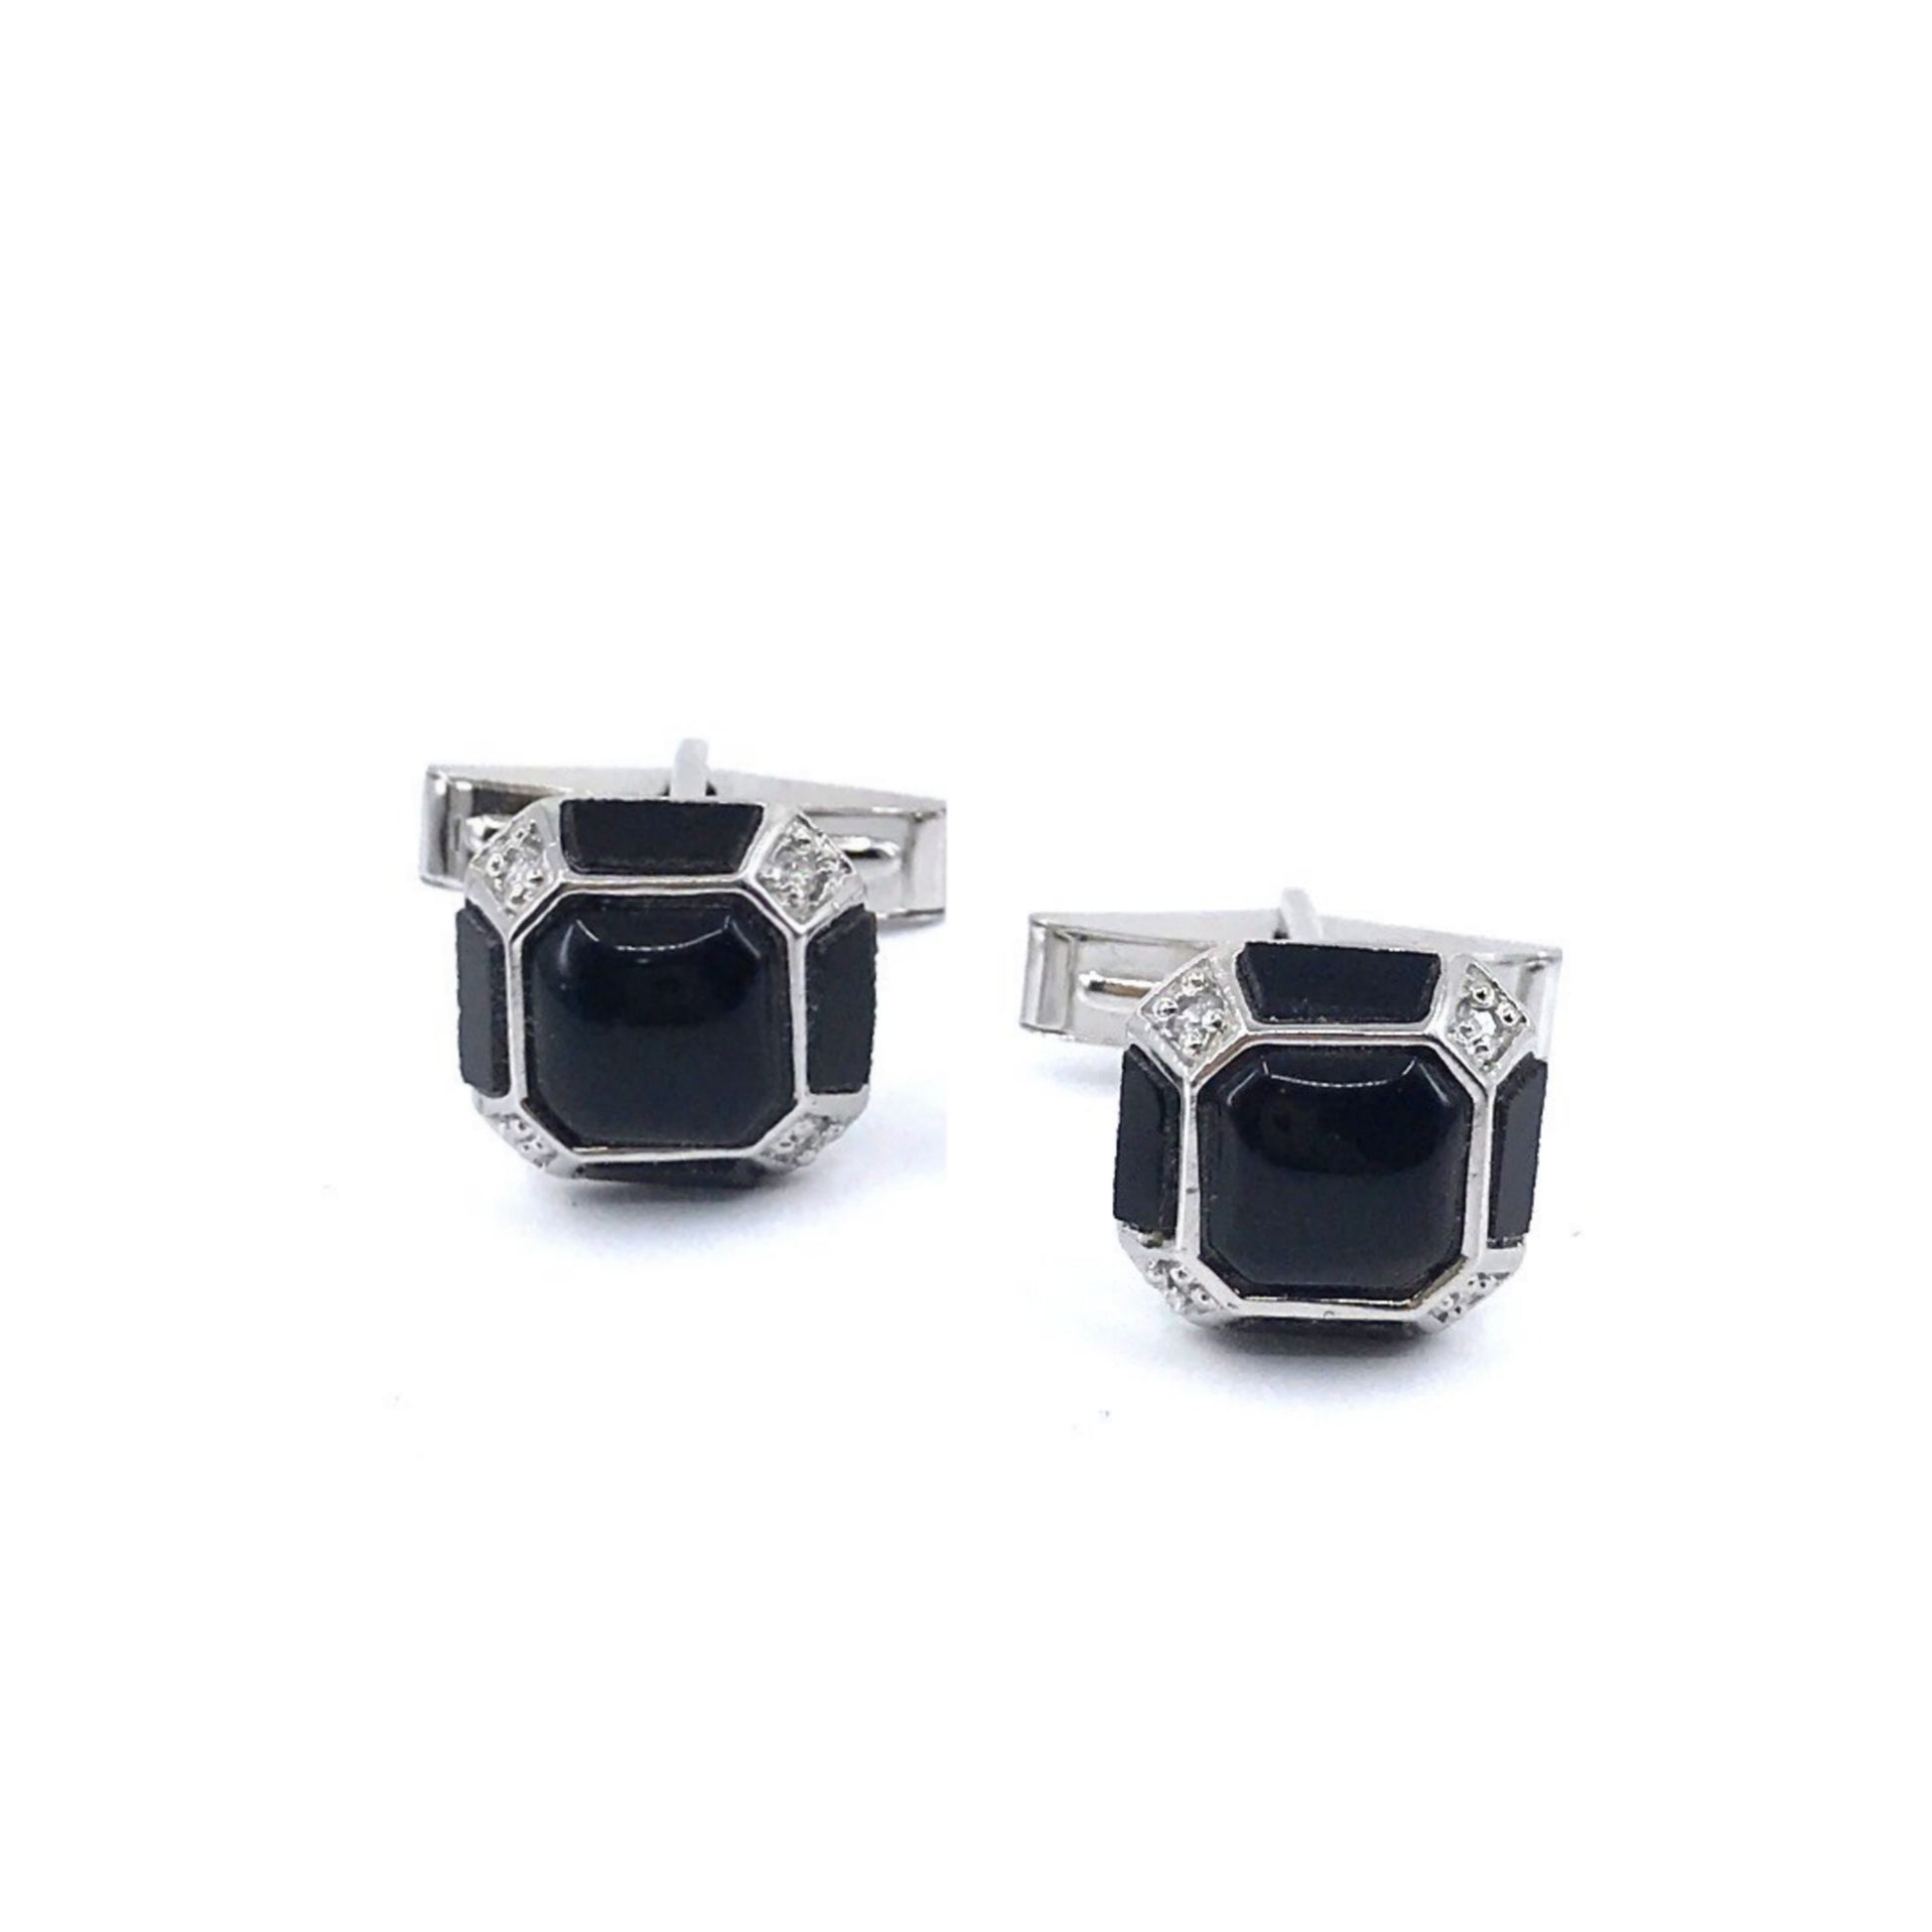 Sterling Silver Square with Cut Corners Black Cufflinks - HK Jewels